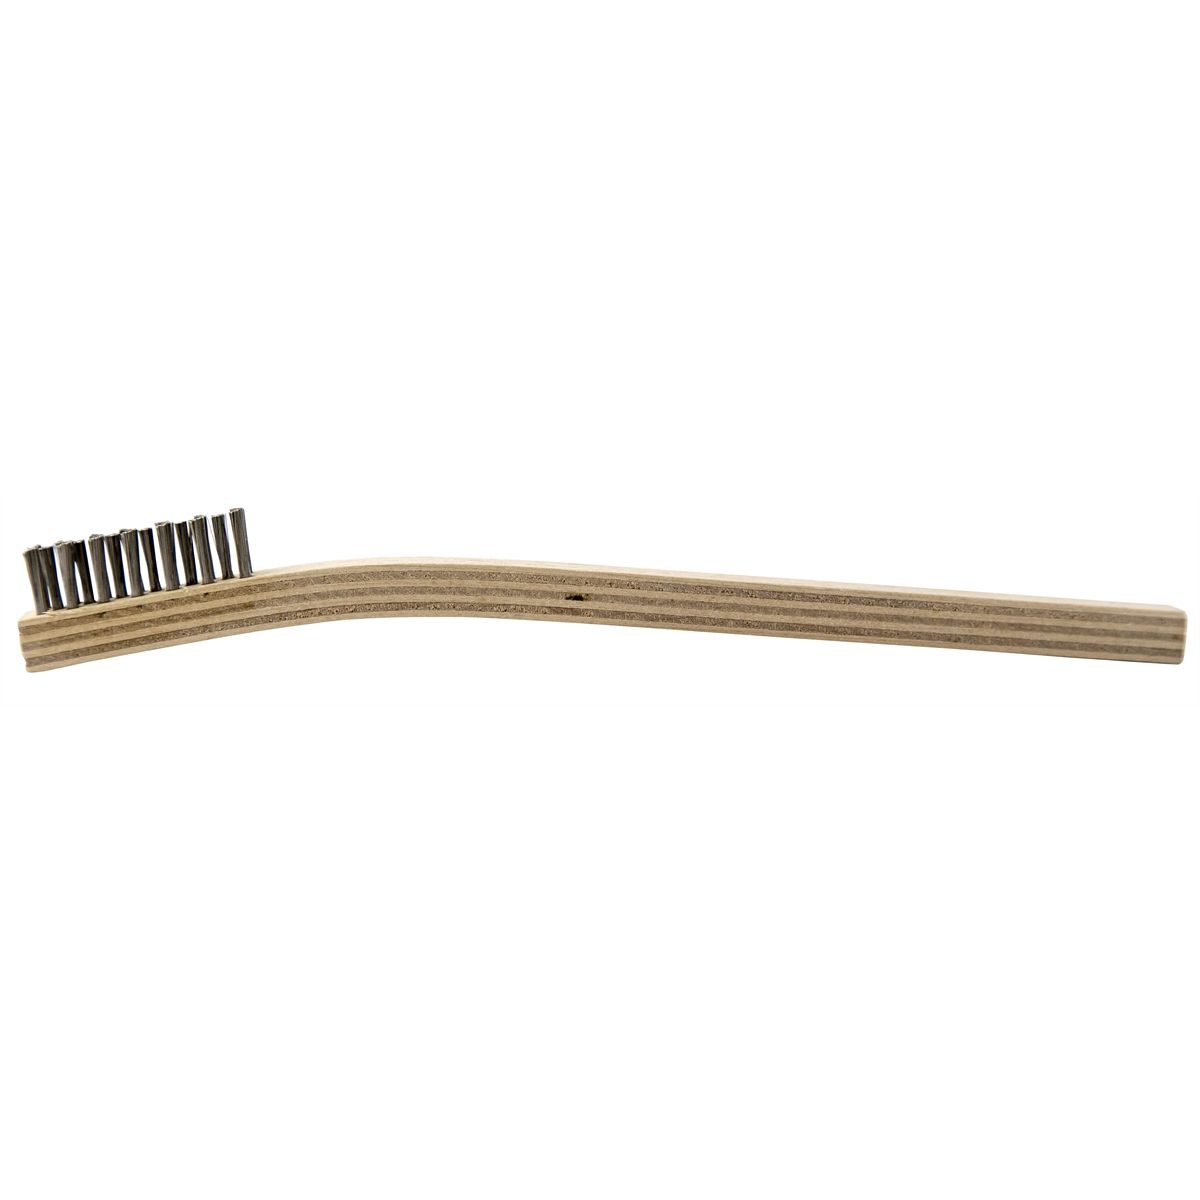 General Purpose Brush w/ Wooden Handle 93AW